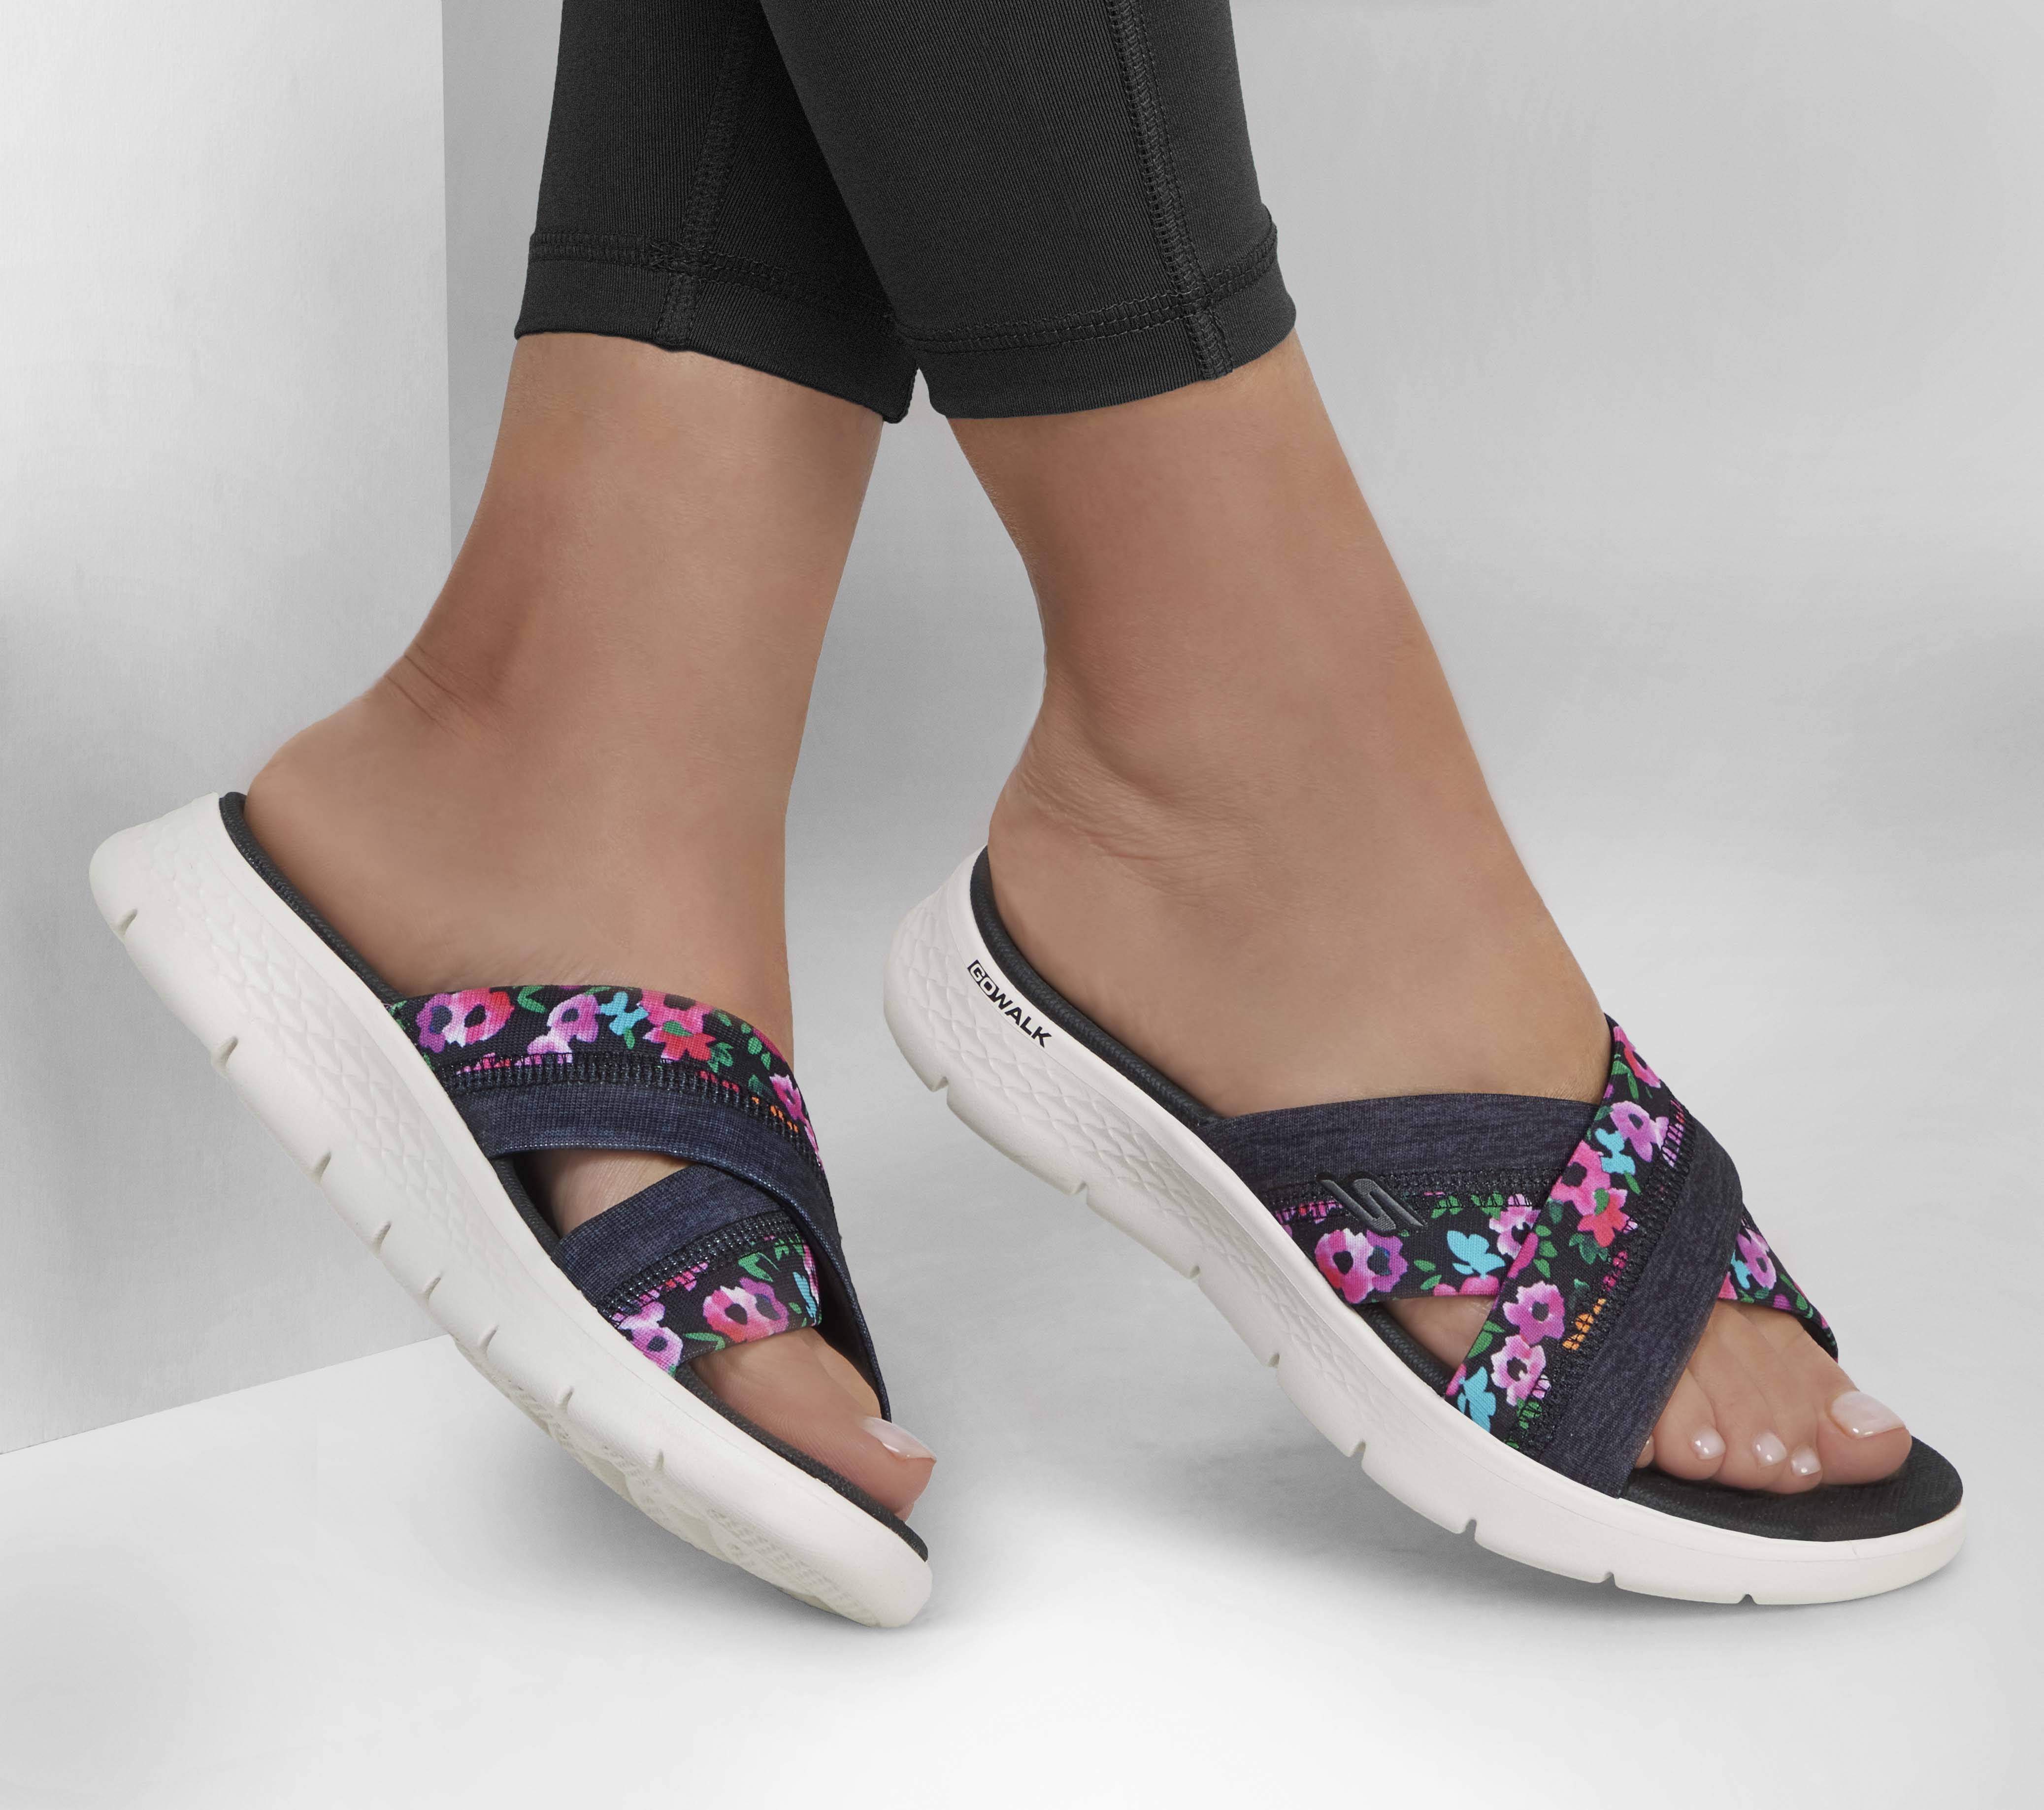 GO Flex Sandal - Blossoms |